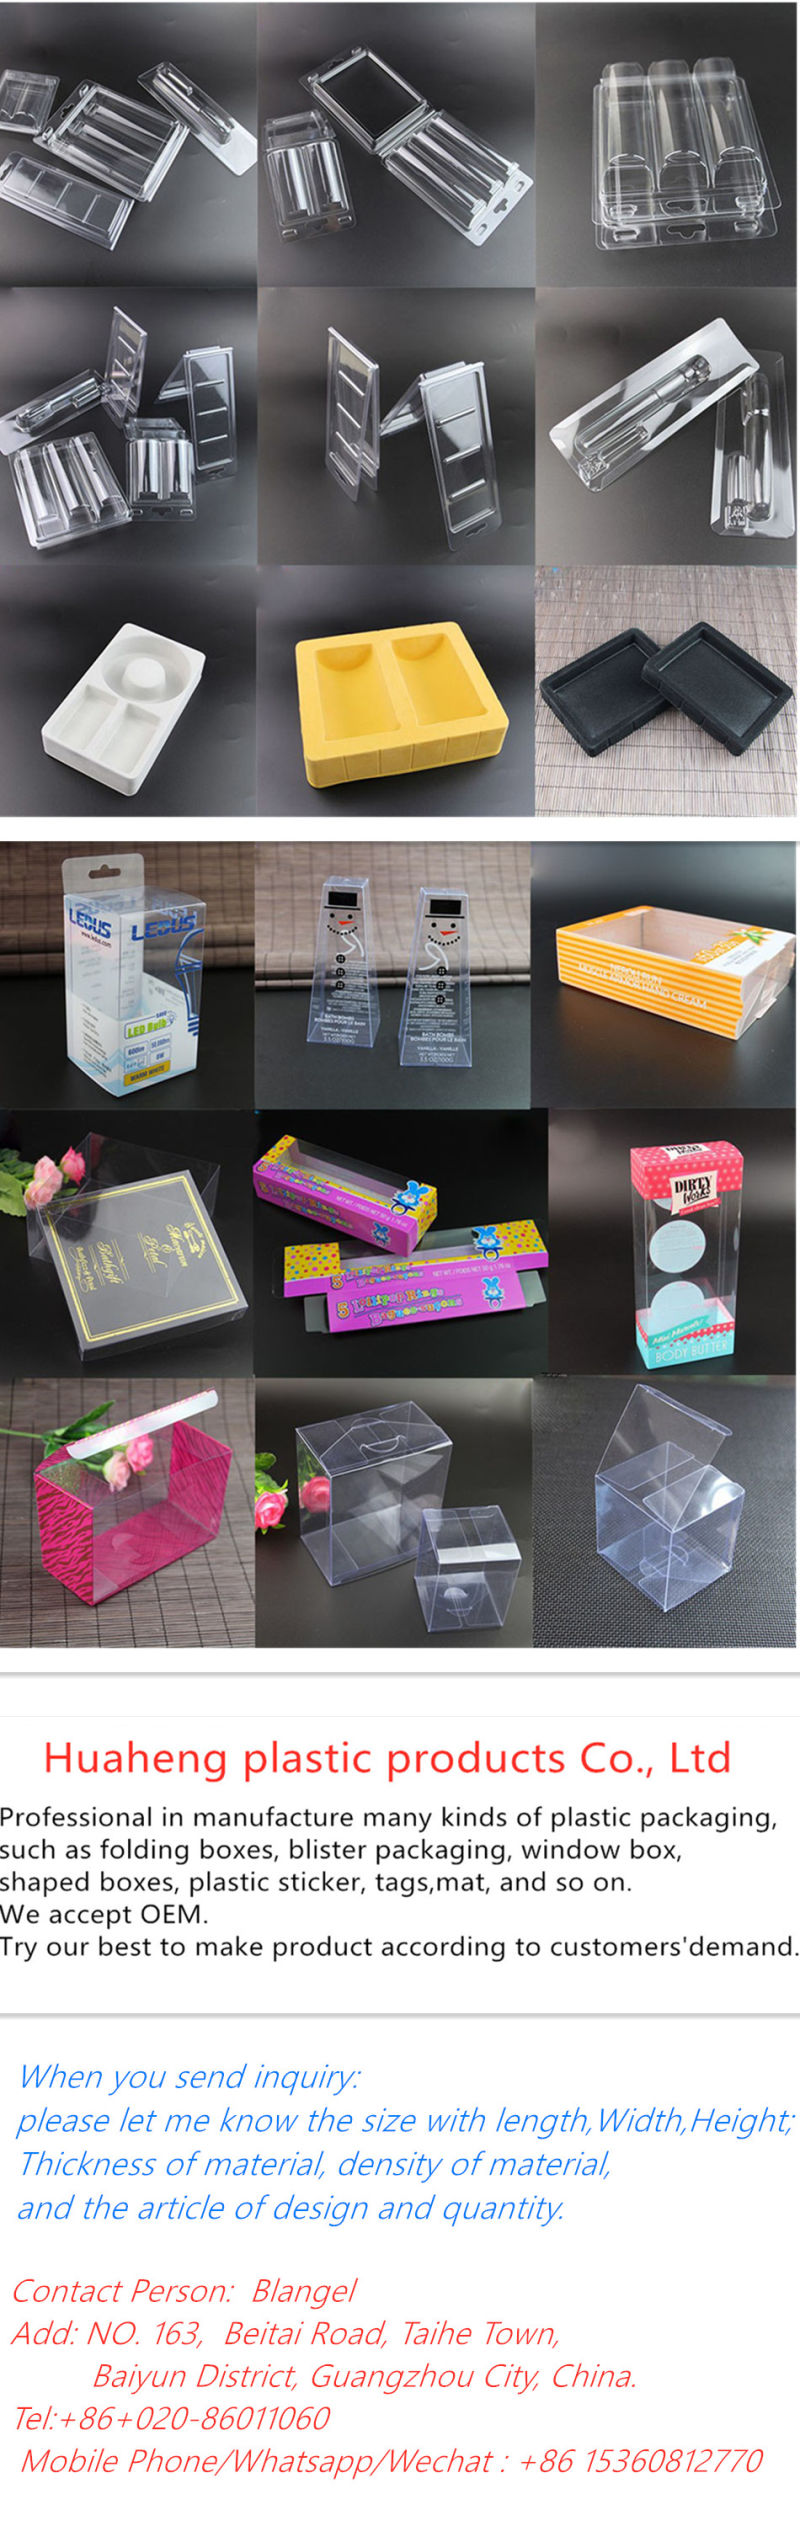 Slide Blisters/Flange Folded Blisters Plastic Household Packaging Box (Carded Blisters)